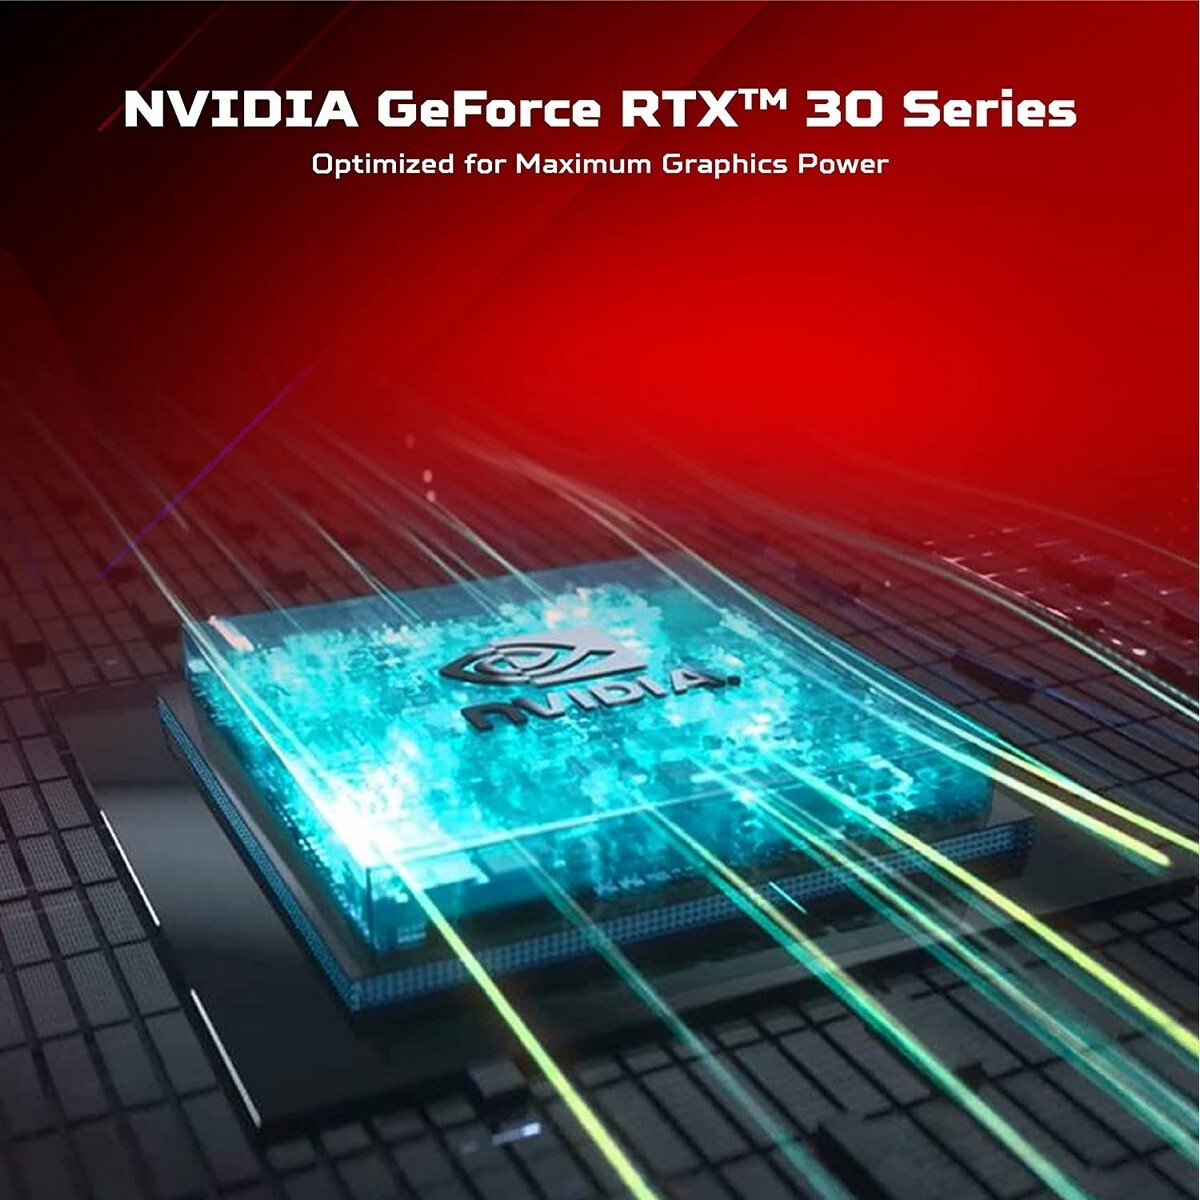 Acer Nitro 5 12th Gen Intel Core i7-12700H 6GB/512GB SSD/1TB HDD/Win 11 Home Gaming Laptop